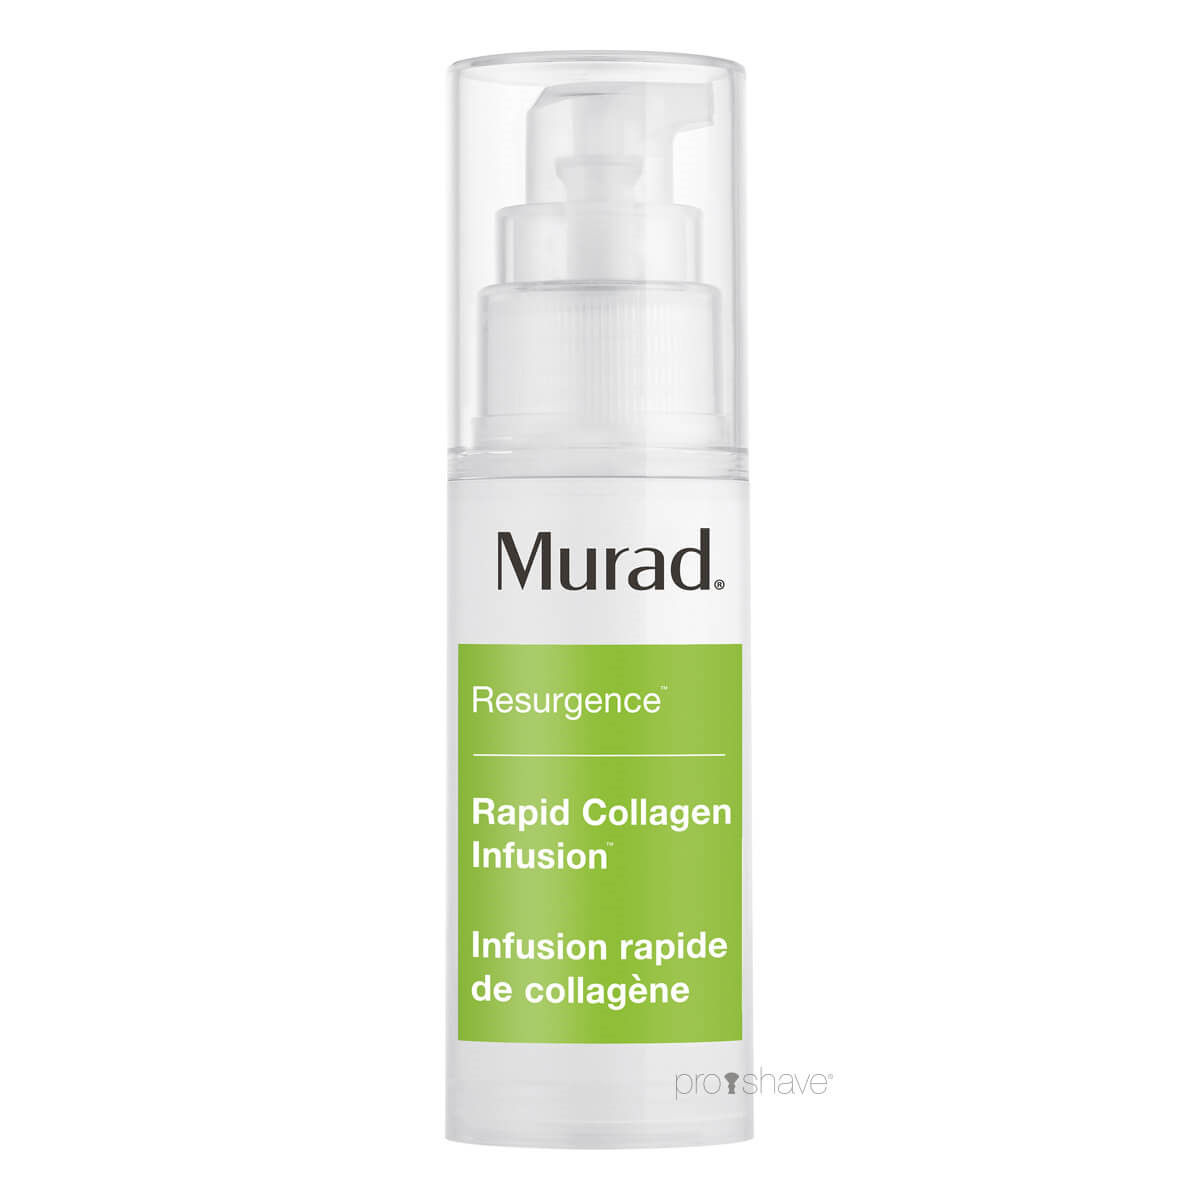 Billede af Murad Resurgence Rapid Collagen Infusion, Resurgence, 30 ml.